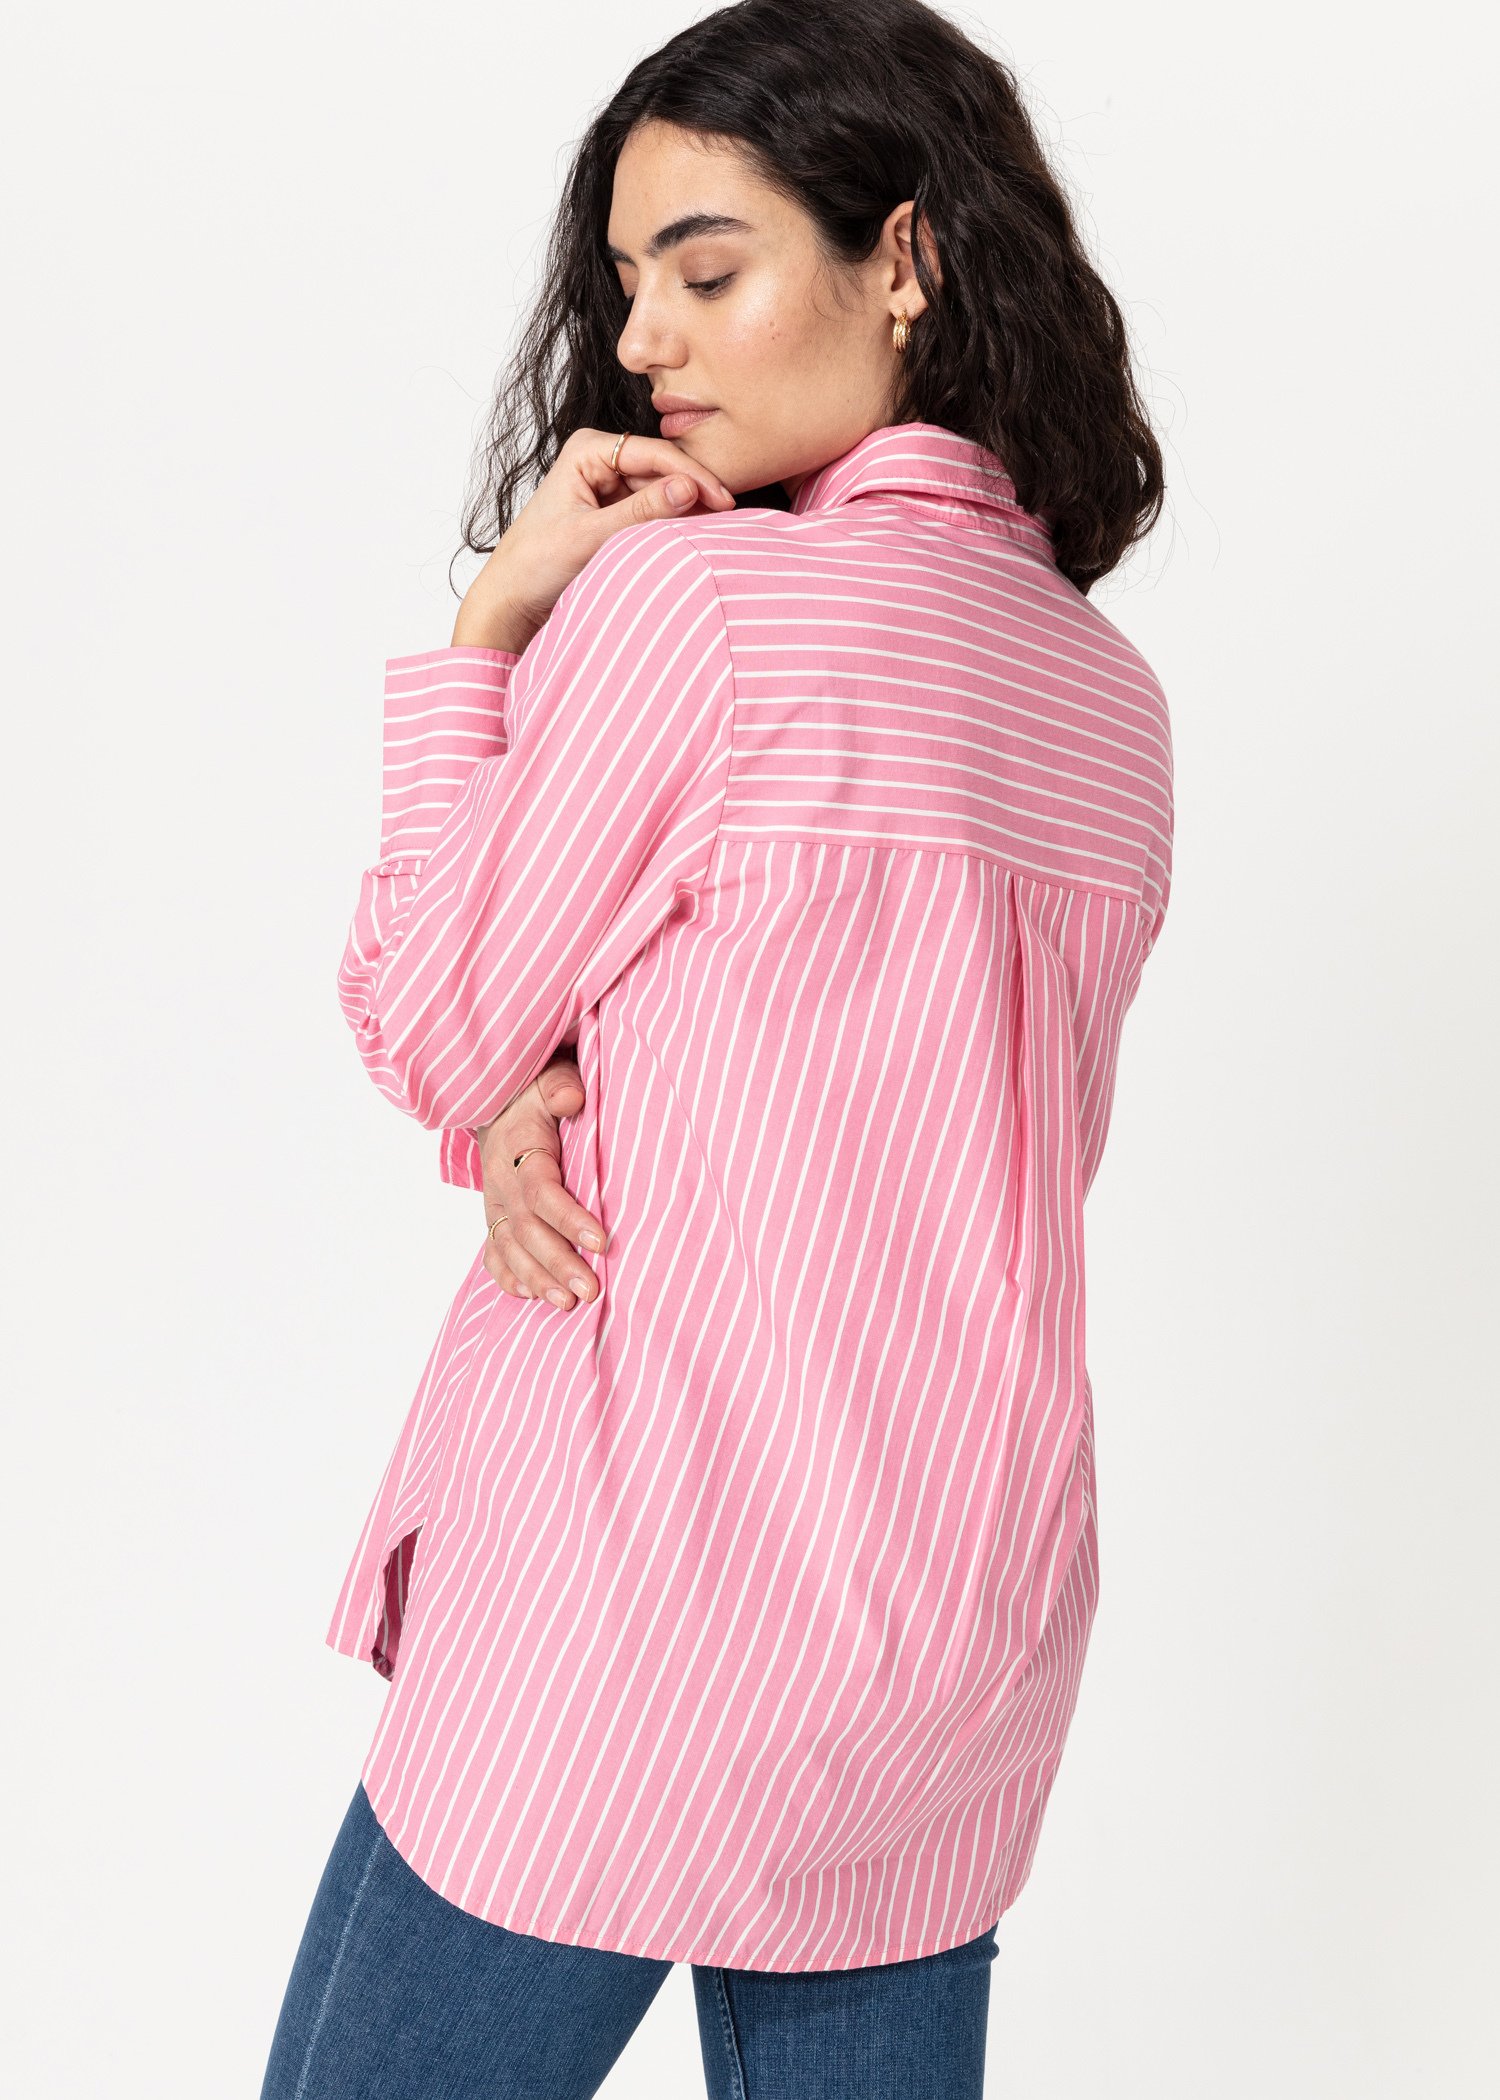 Striped poplin cotton shirt Image 5